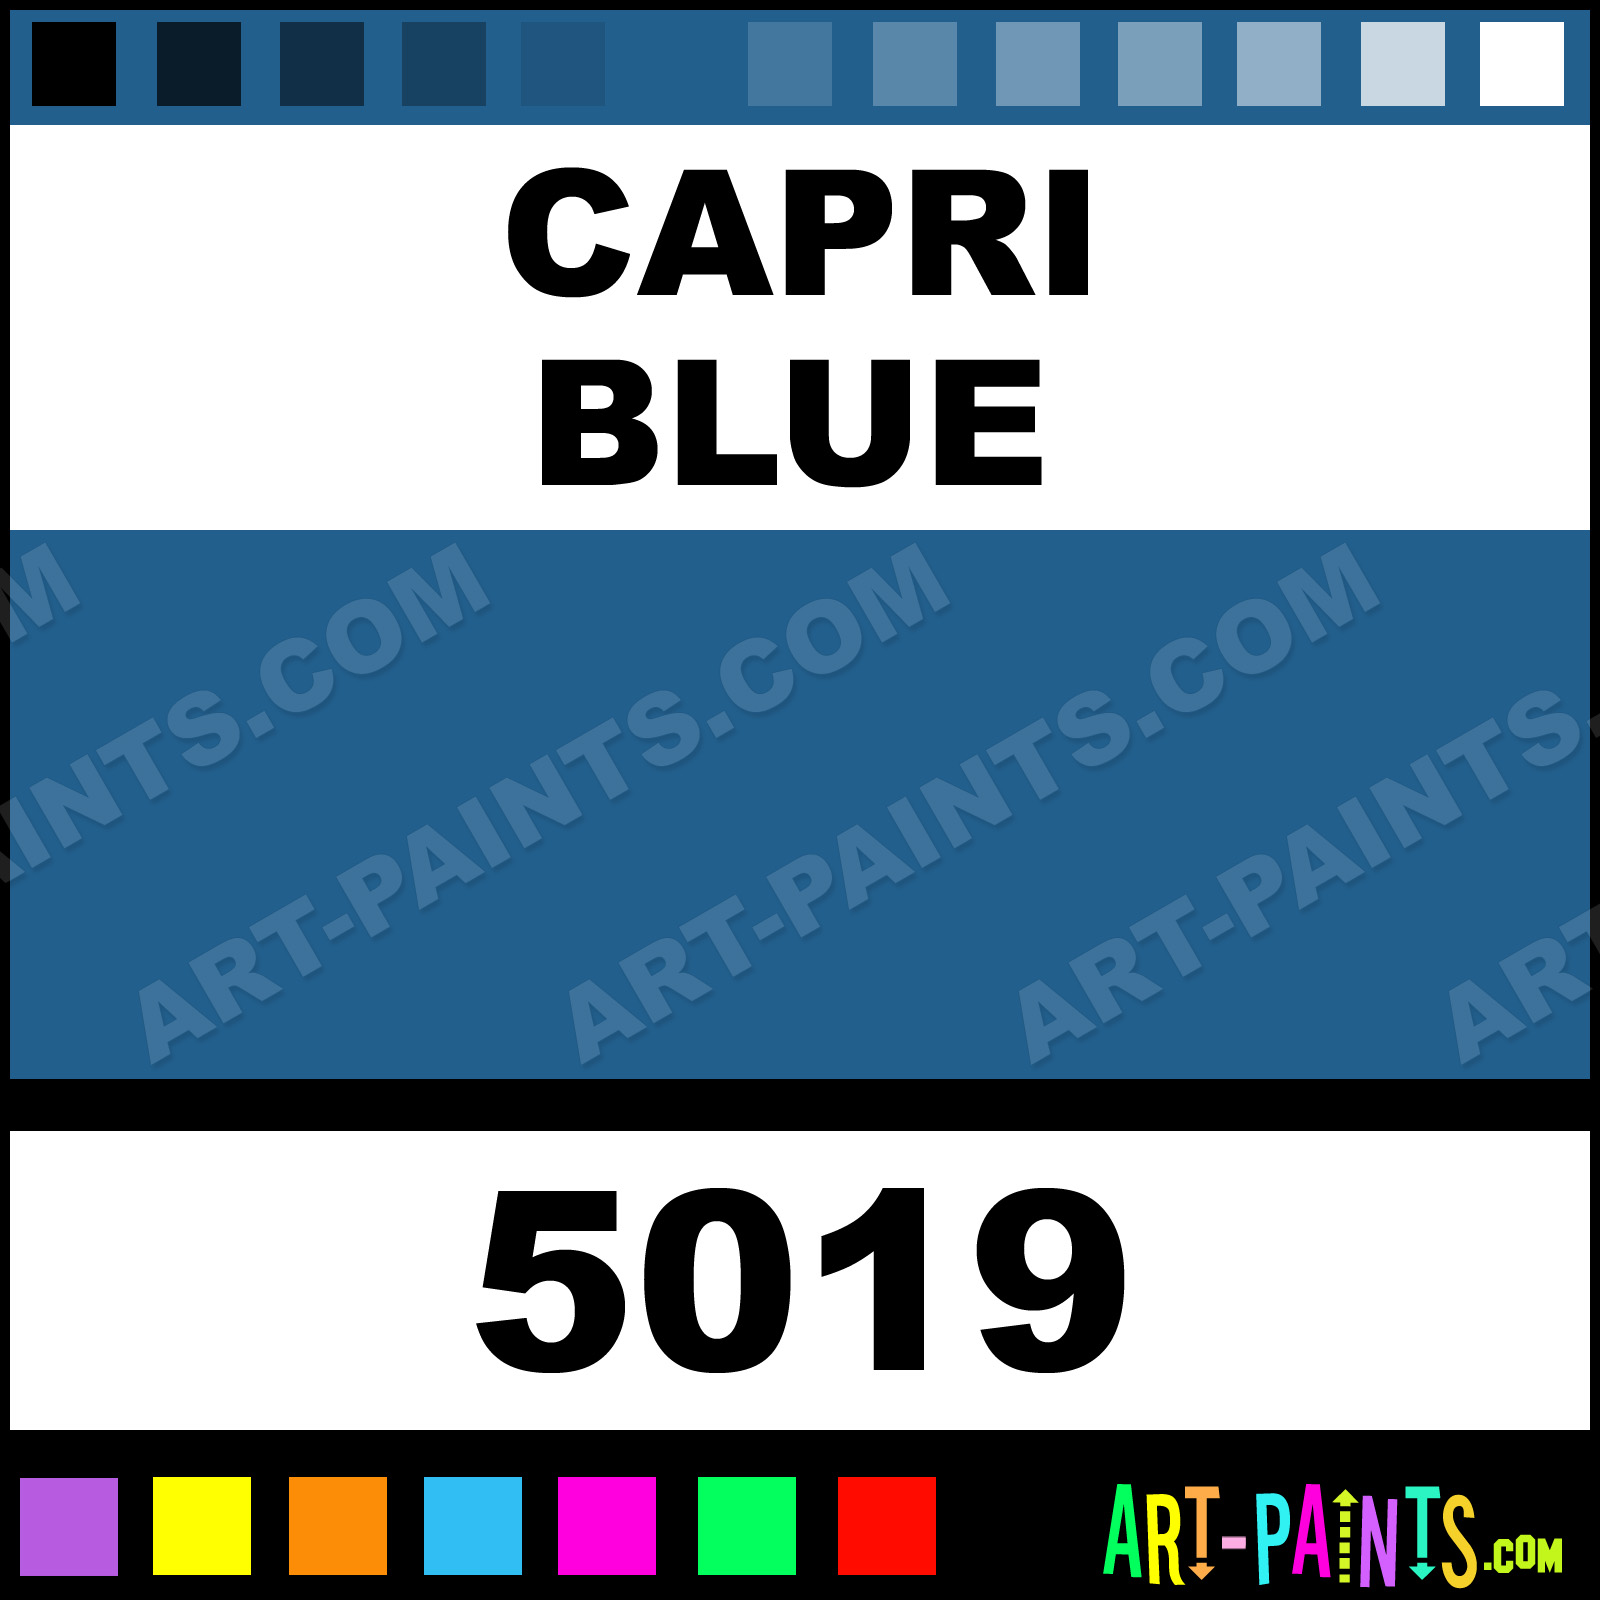 http://www.art-paints.com/Paints/Airbrush/Sparvar/Capri-Blue/Capri-Blue-xlg.jpg